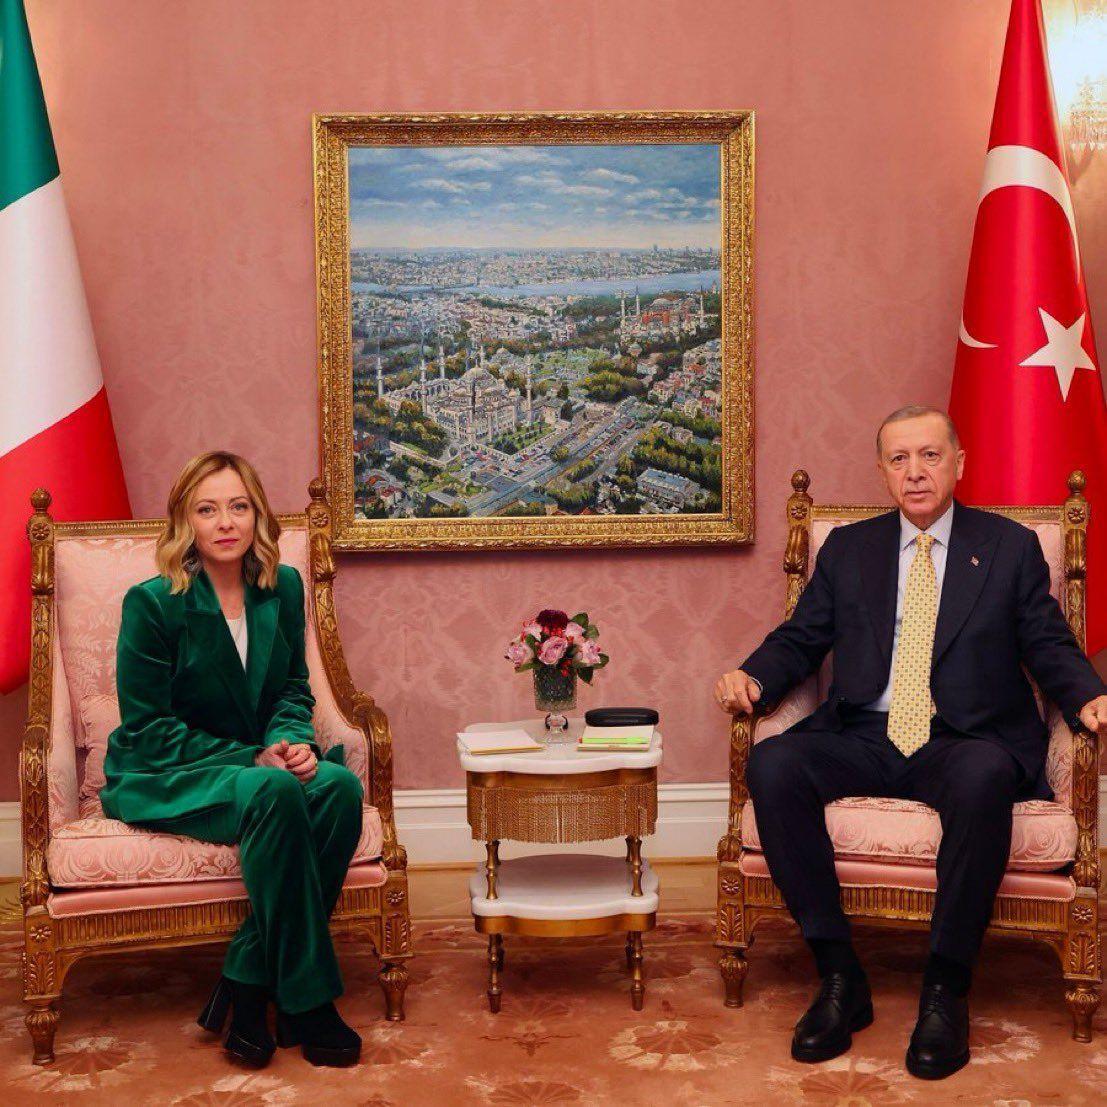 Italian PM meets with President Erdogan